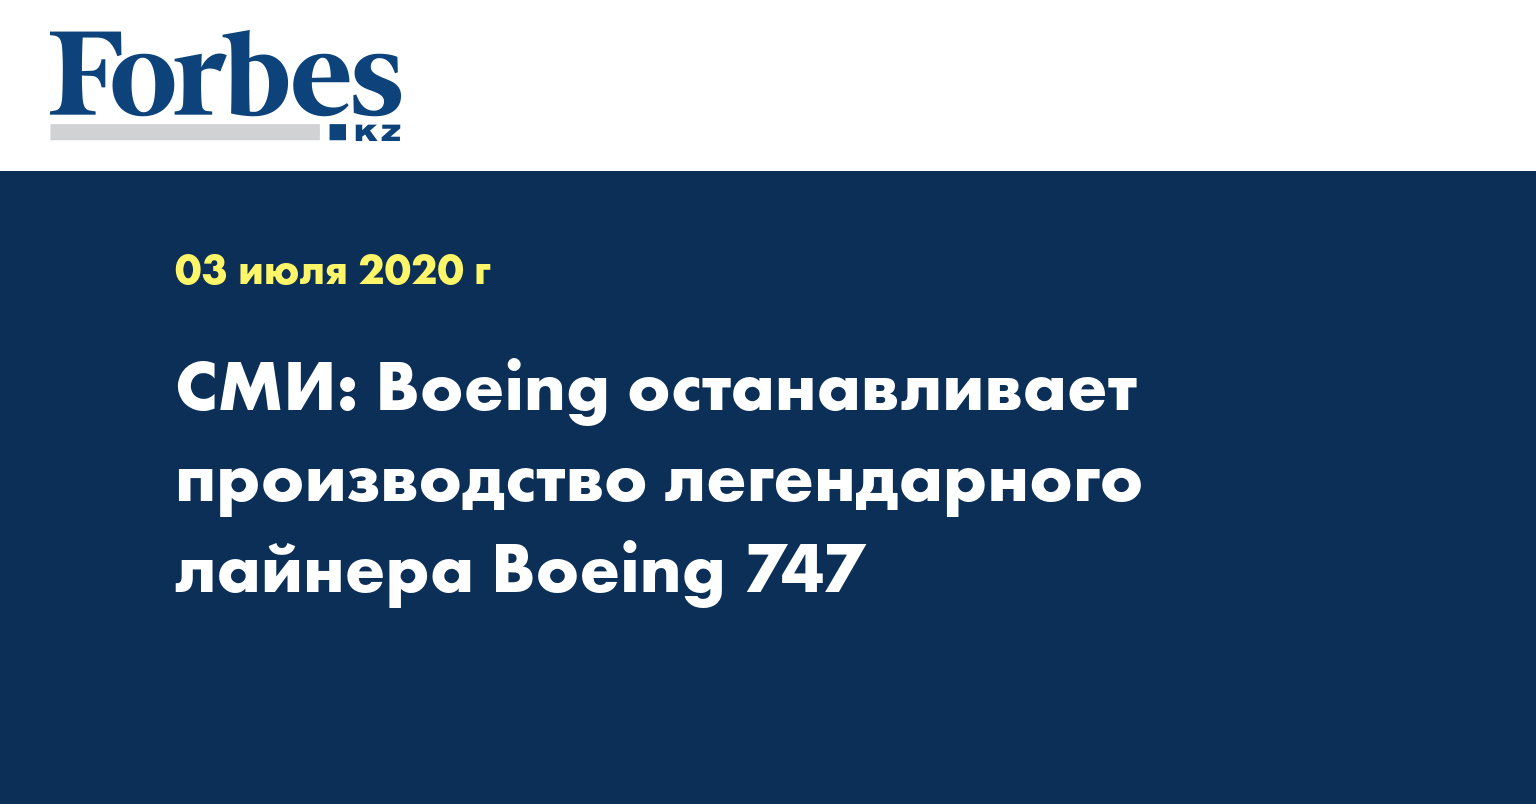 СМИ: Boeing останавливает производство легендарного лайнера Boeing 747